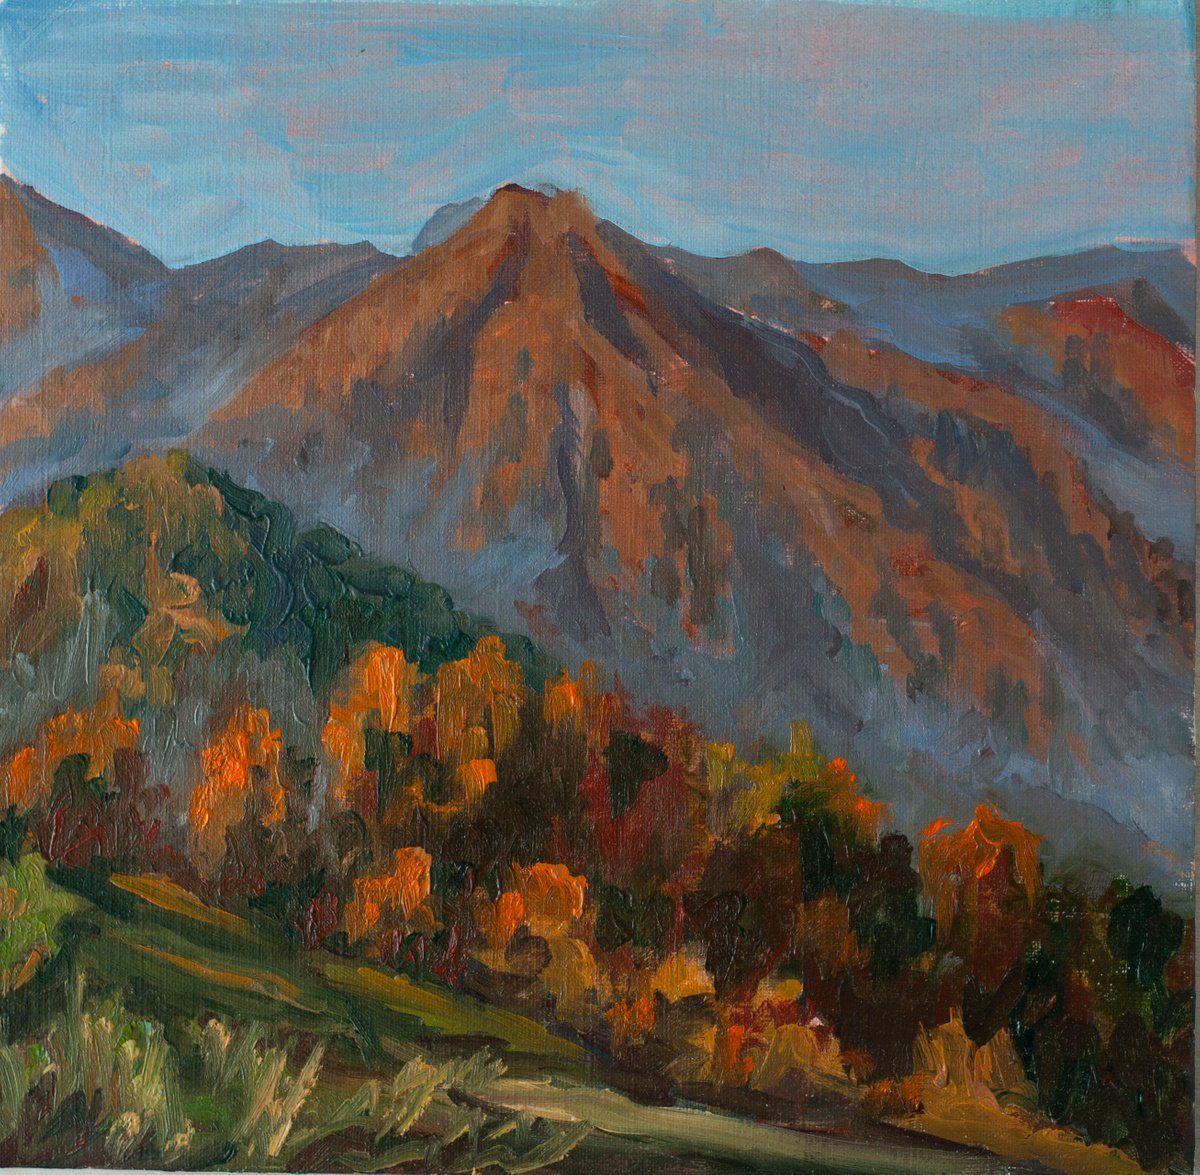 Autumn in the mountains by Maria Chernobrovkina